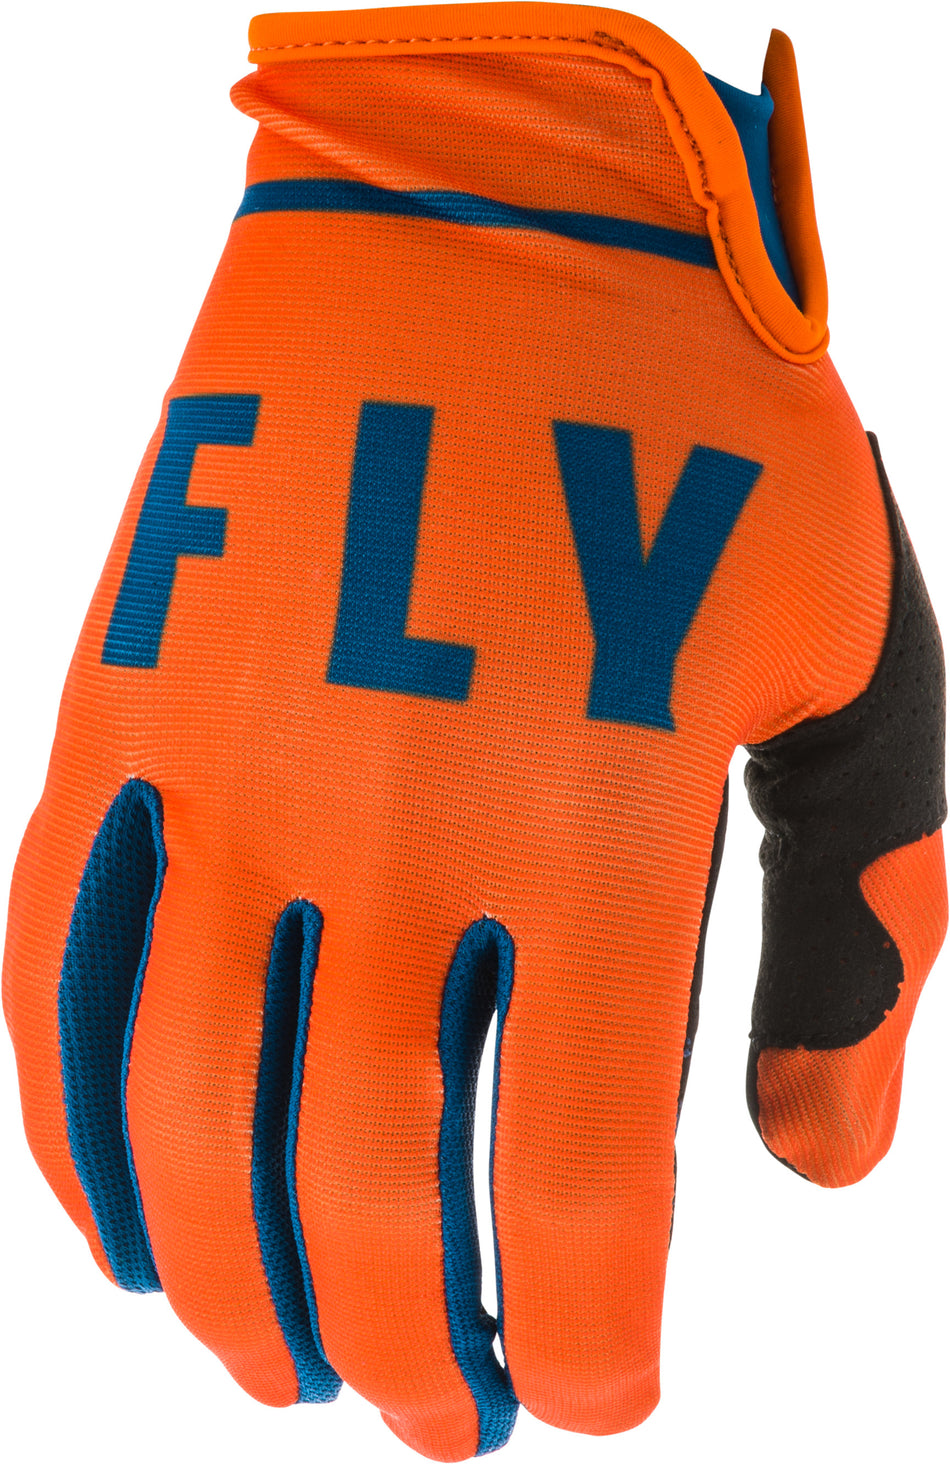 FLY RACING Lite Gloves Orange/Navy Sz 09 373-71309